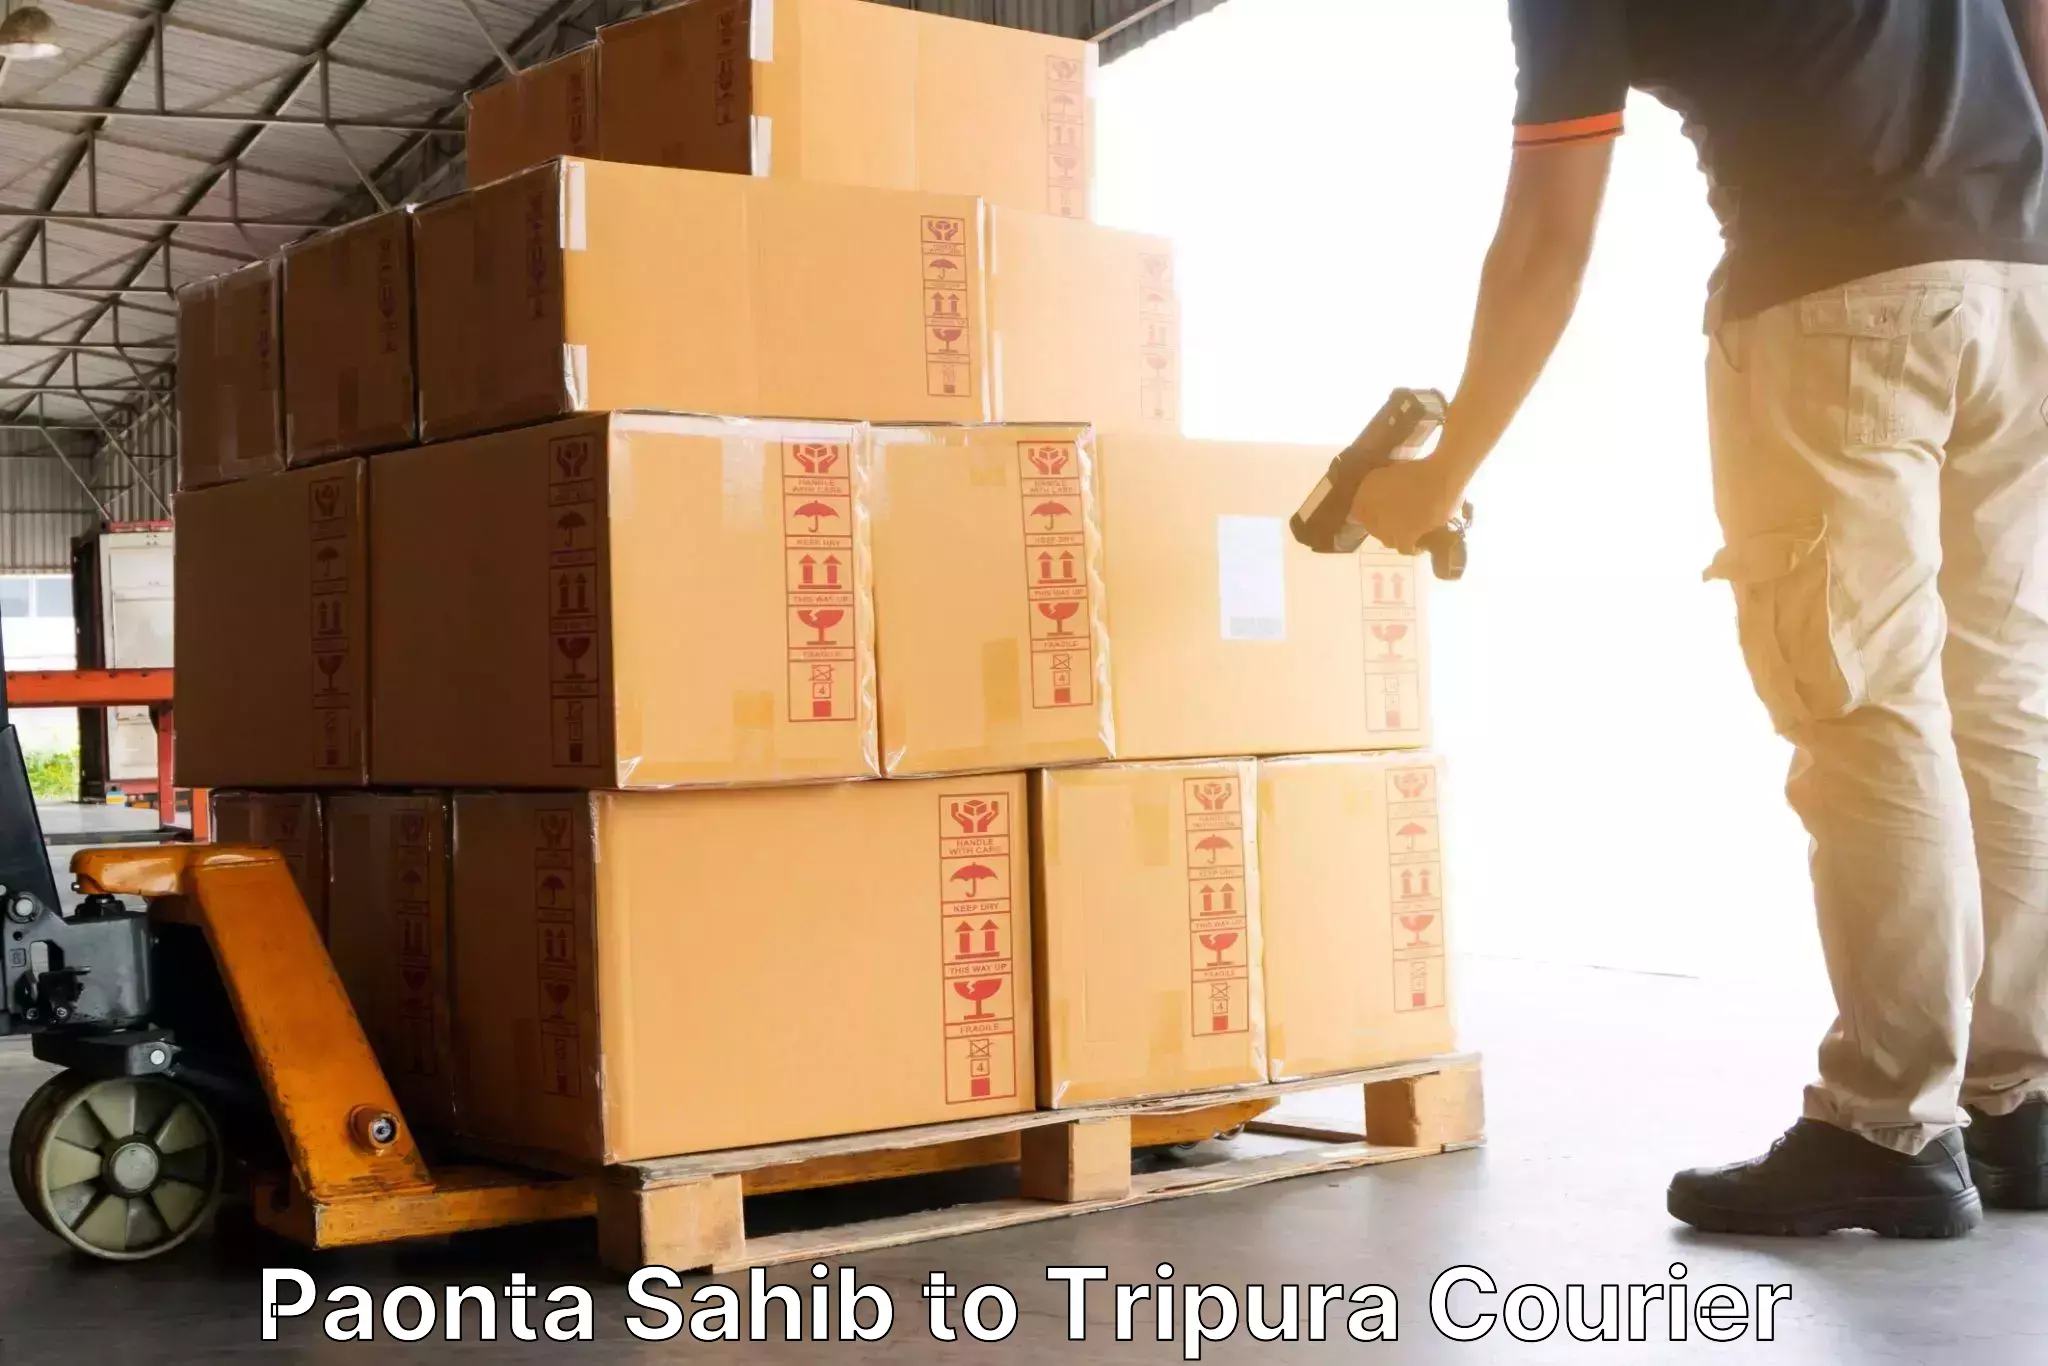 Premium courier solutions Paonta Sahib to Udaipur Tripura